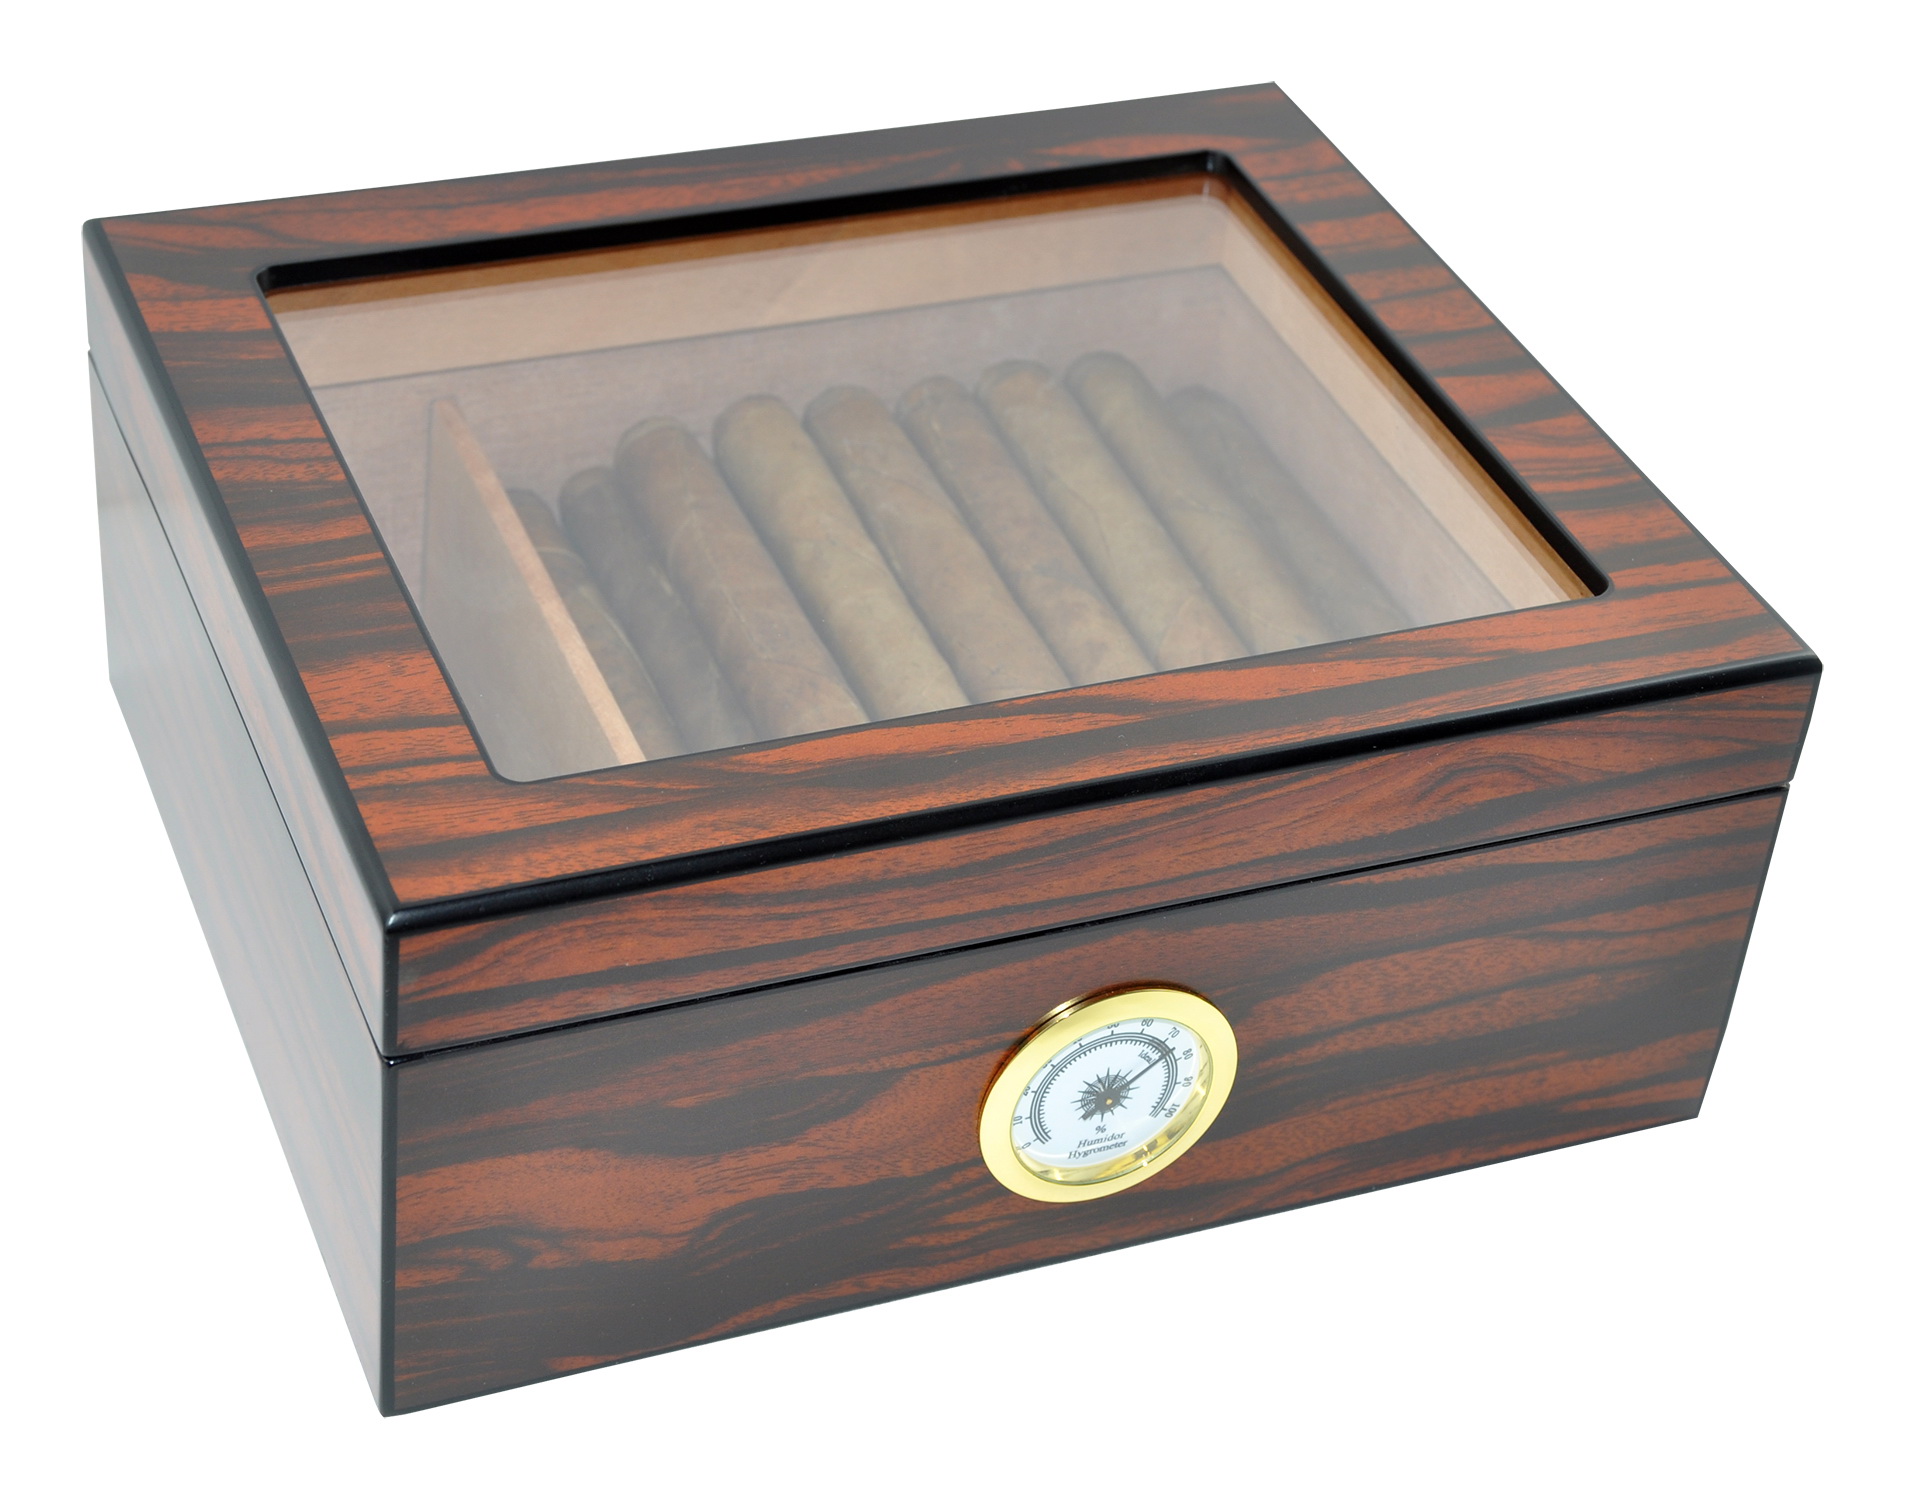 DUCIHBA Humidor Box - Holds 25-50 Cigars - Tempered Glass Display - Spanish Cedar Wood - Brown Color - image 1 of 7